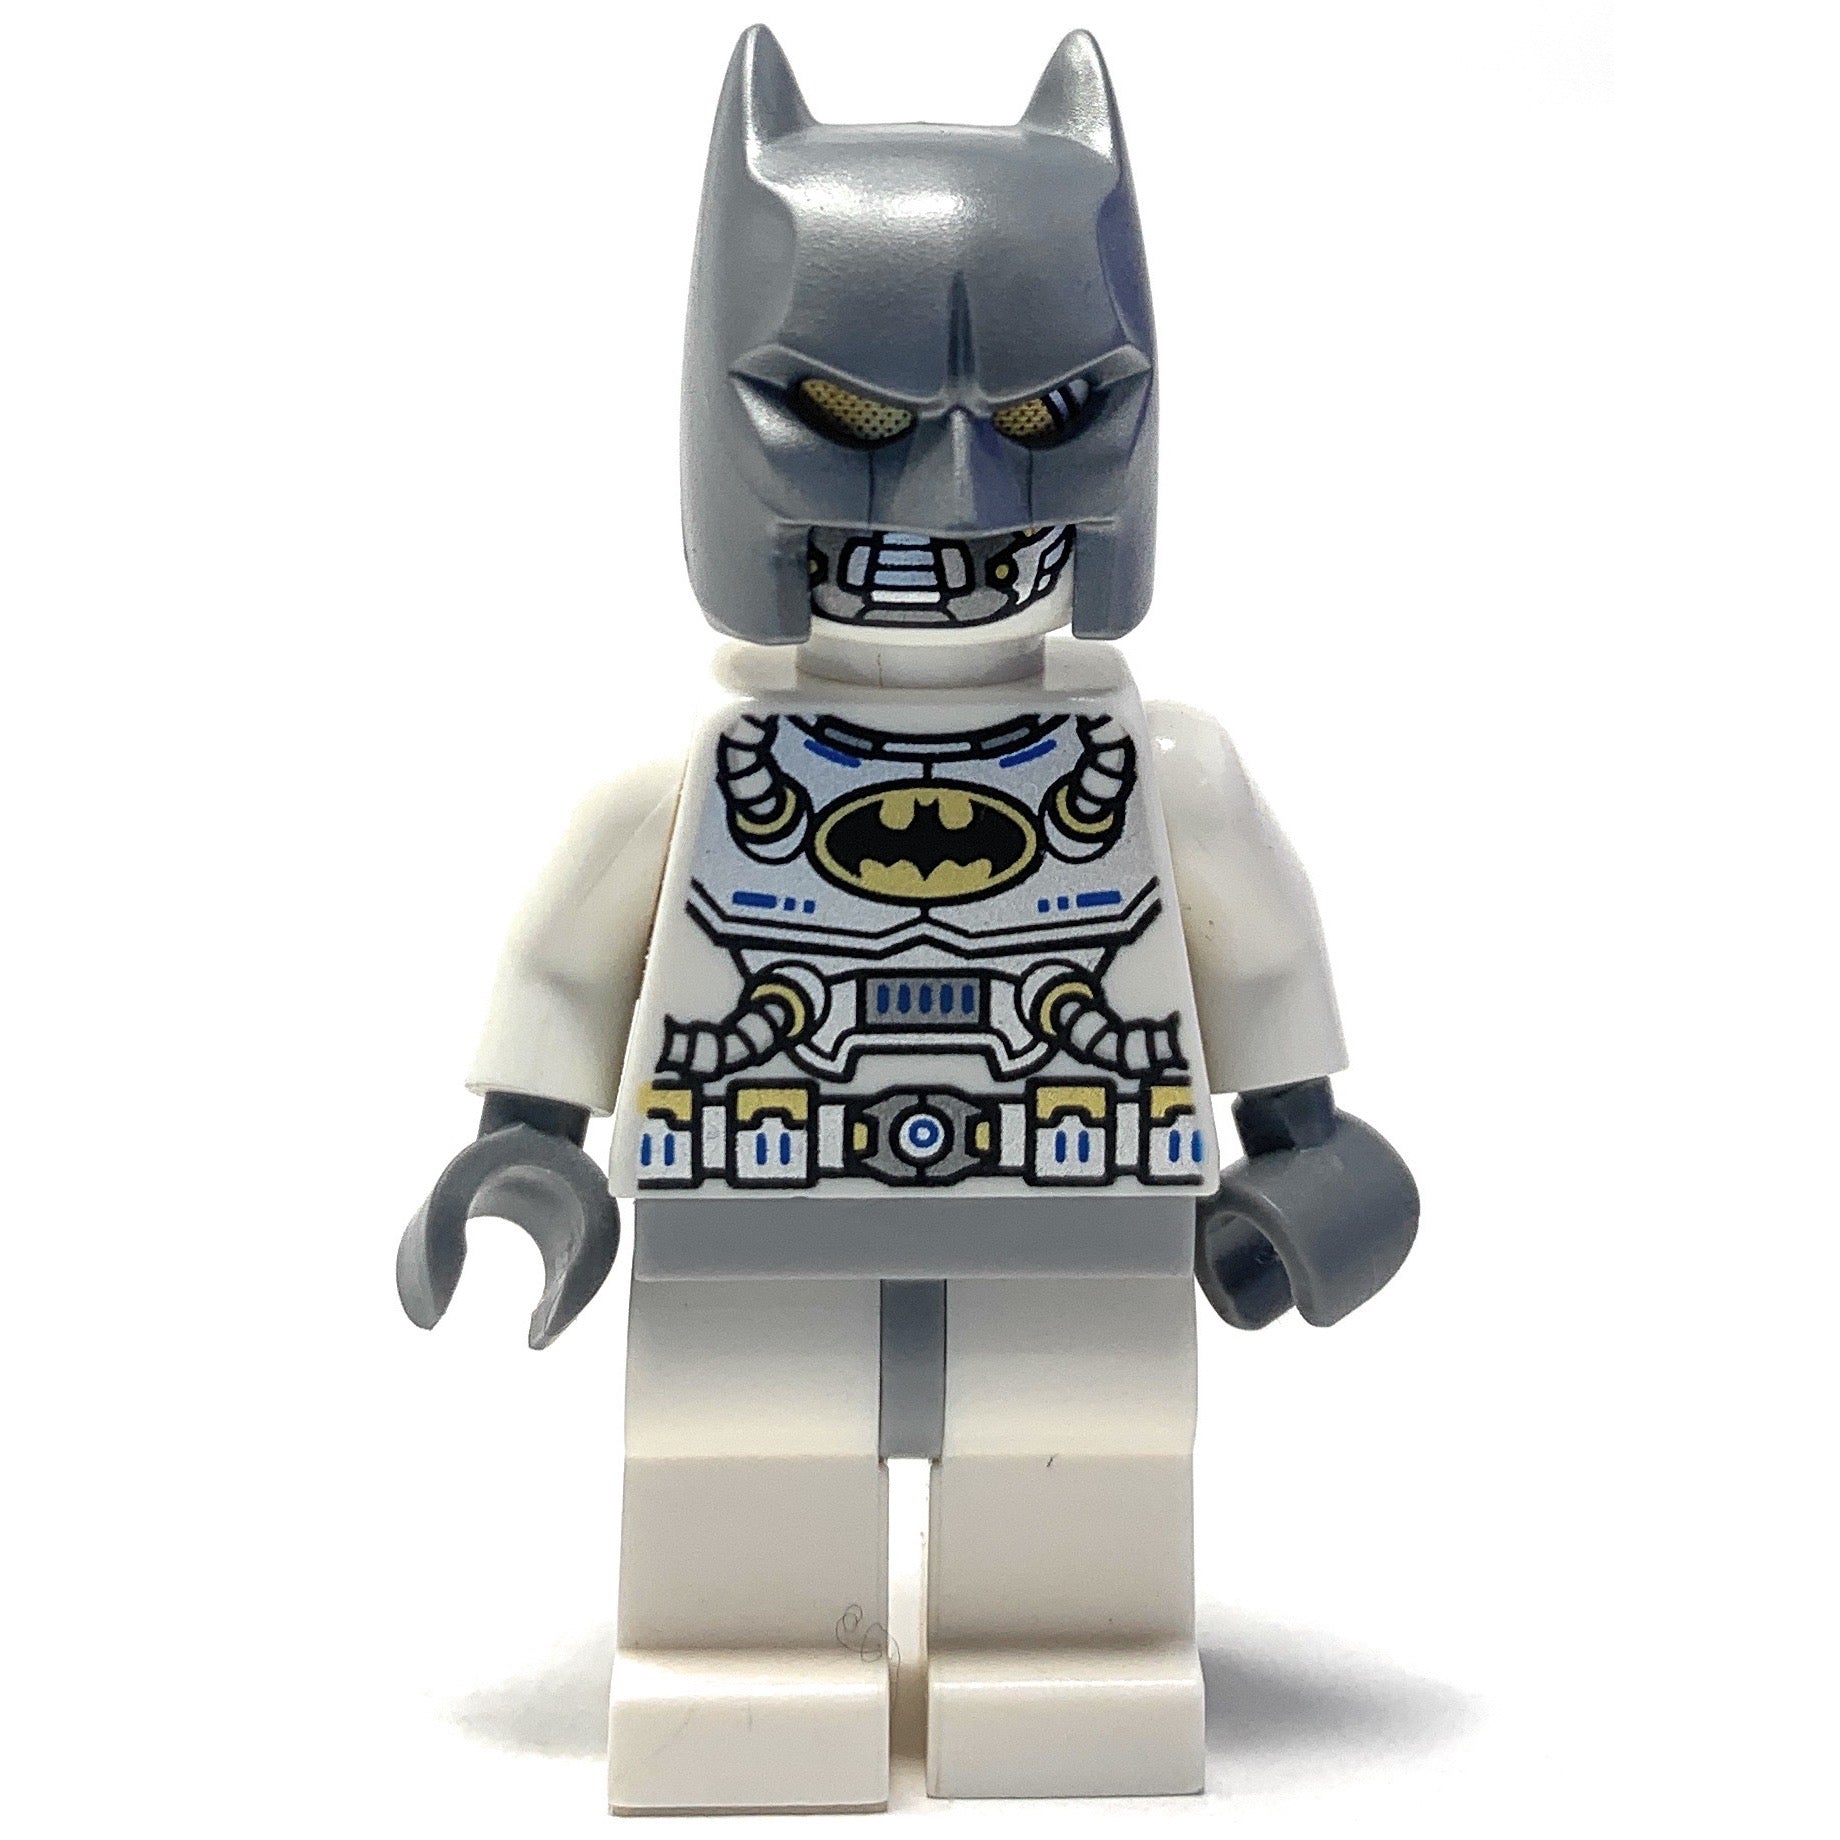 Space Batman (Justice League) - LEGO DC Comics Minifigure (2015)